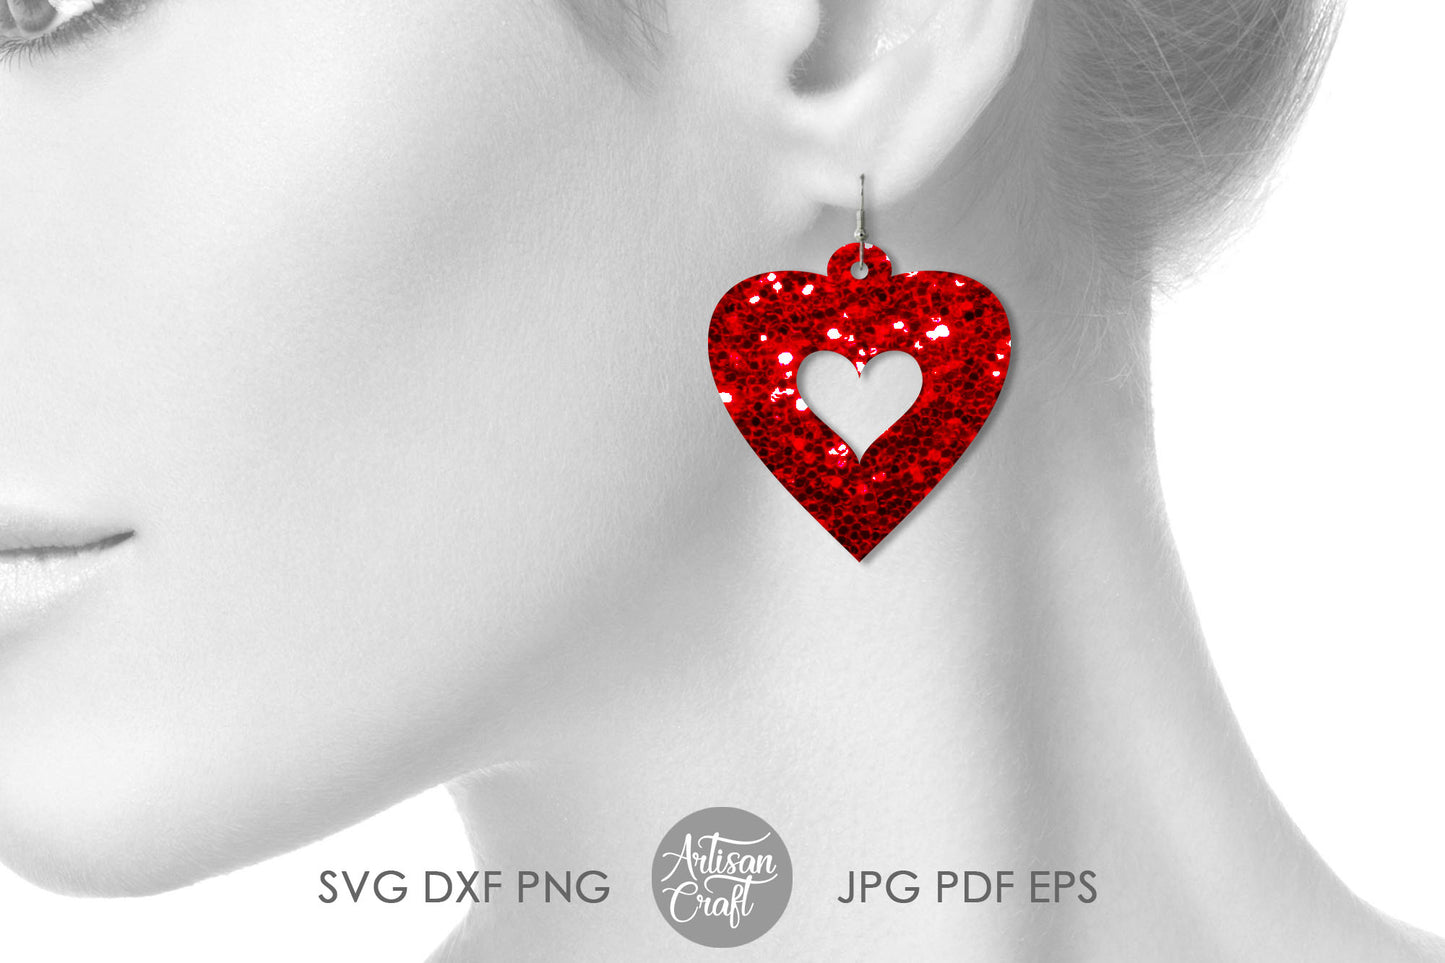 FREE SVG - Heart Earrings SVG